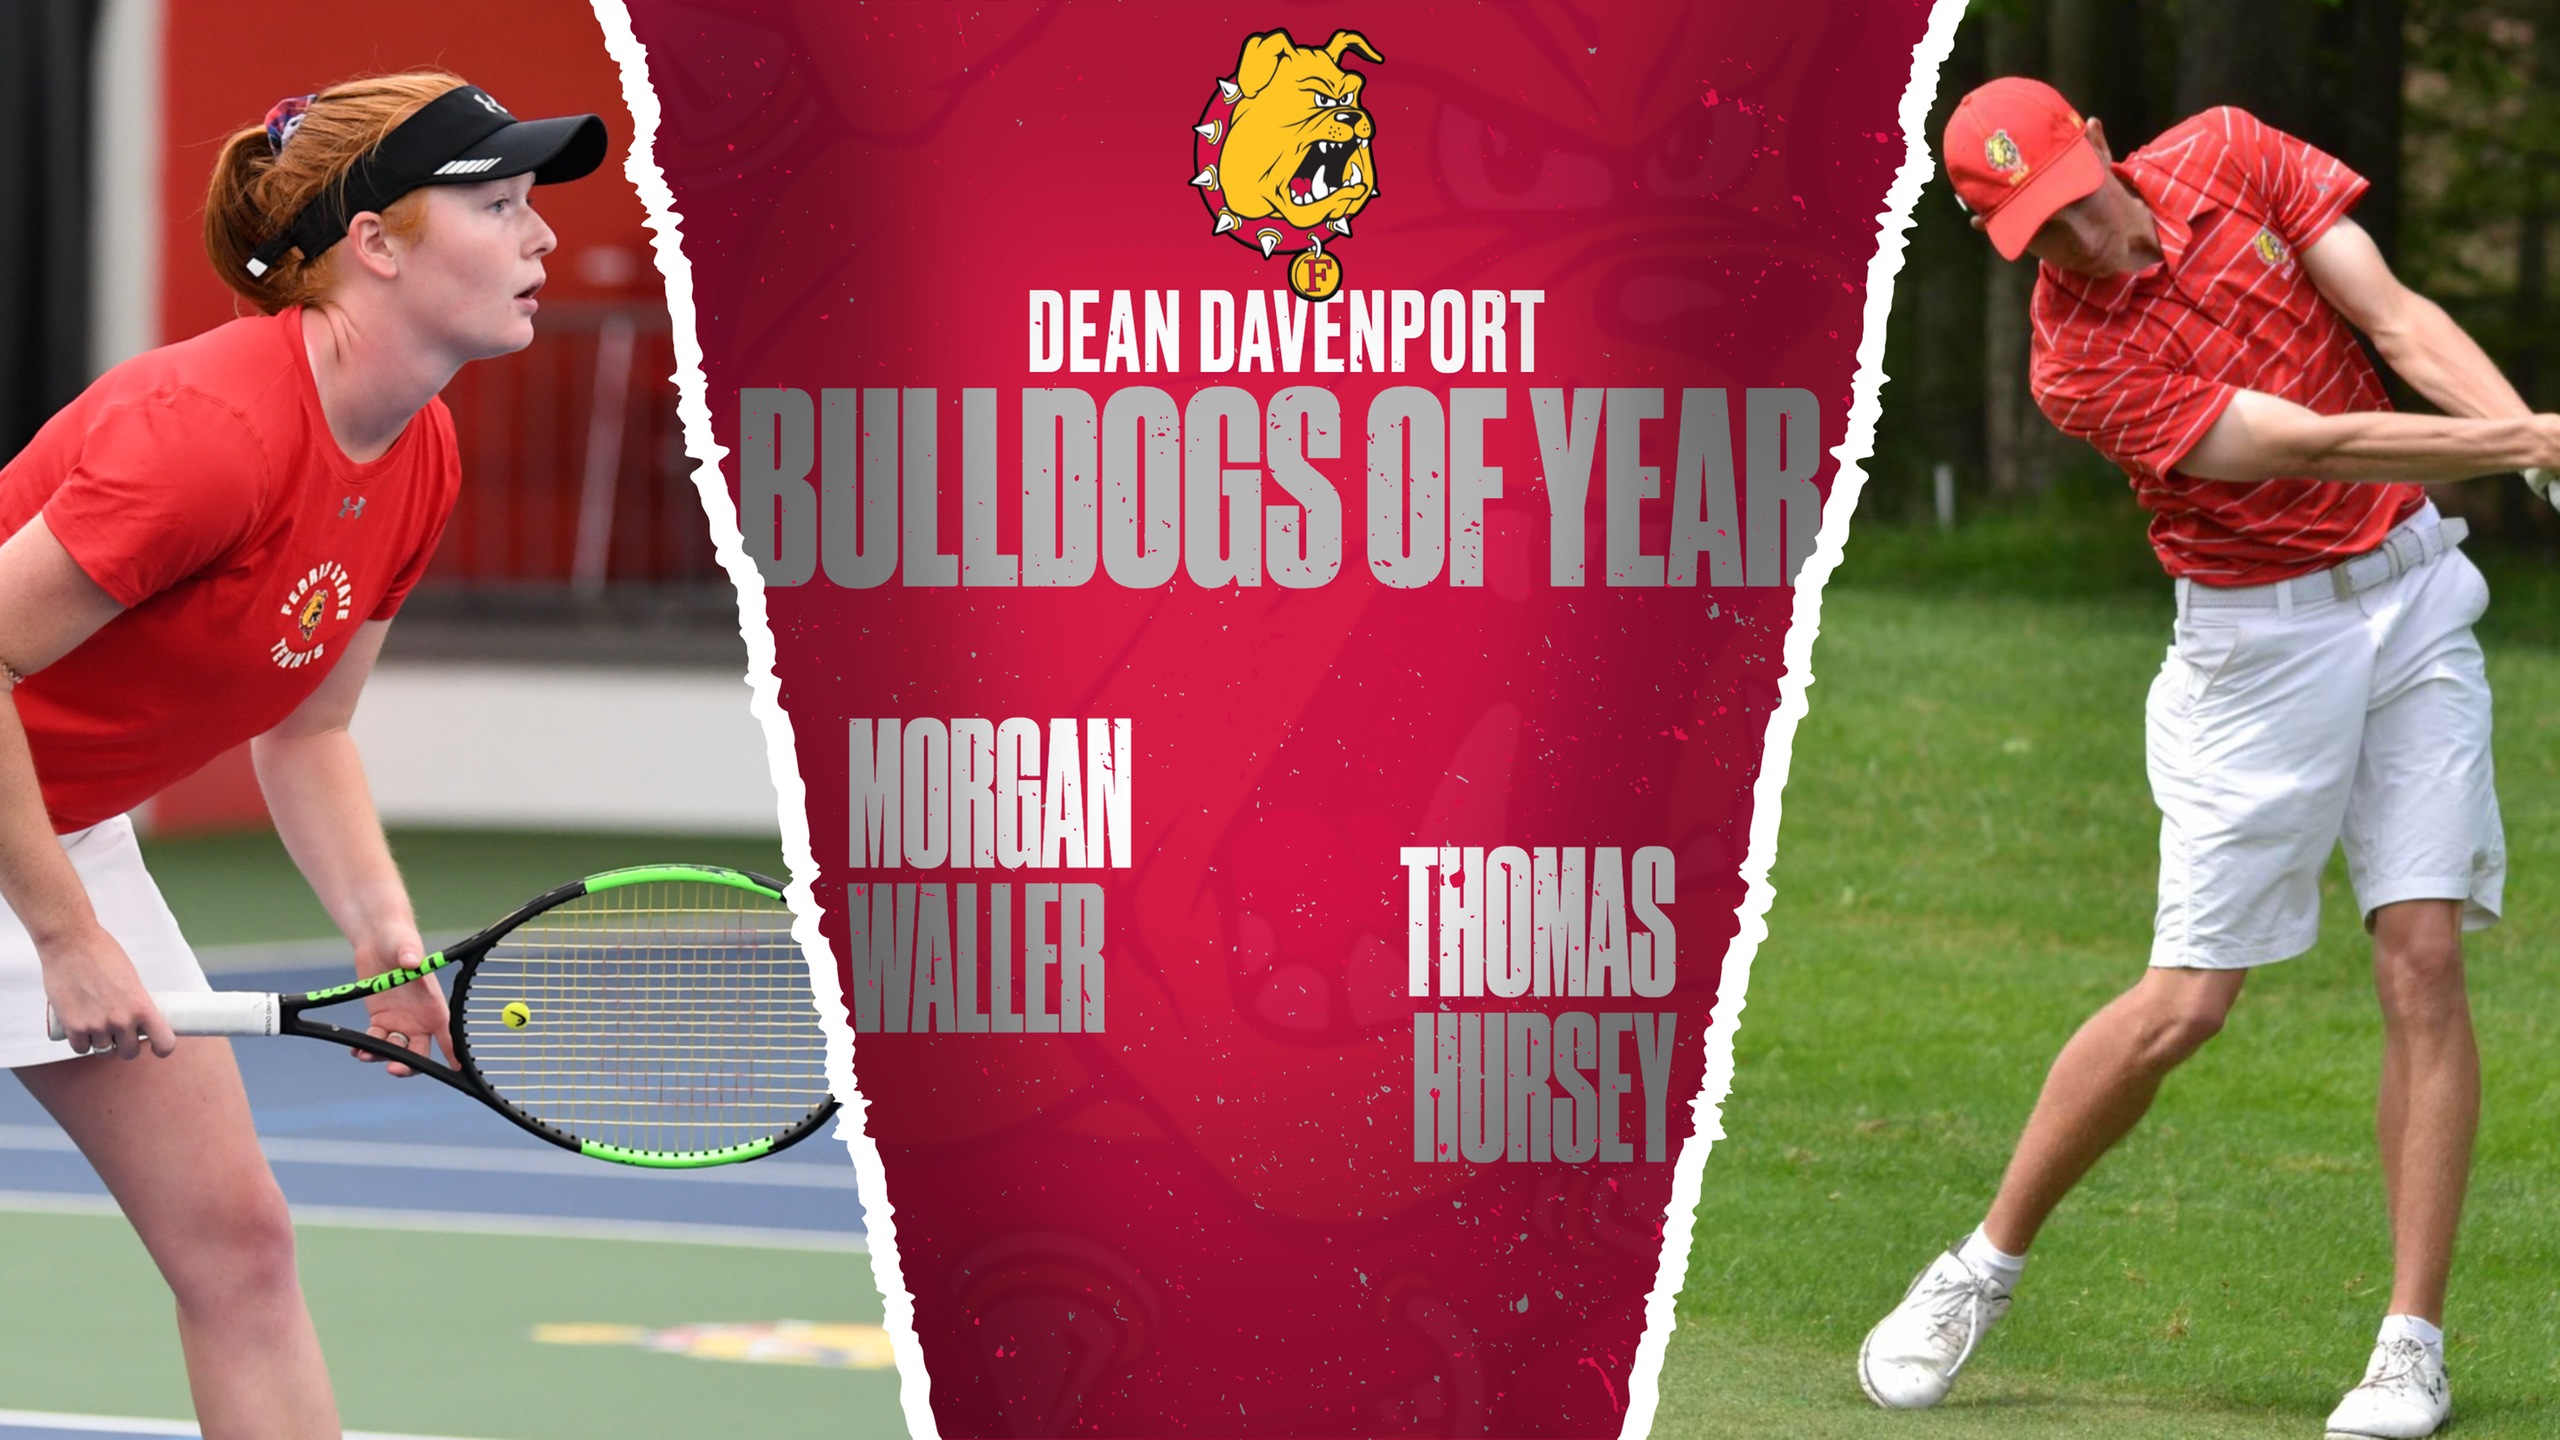 Standouts Morgan Waller and Thomas Hursey Tabbed As Dean Davenport Bulldogs Of The Year